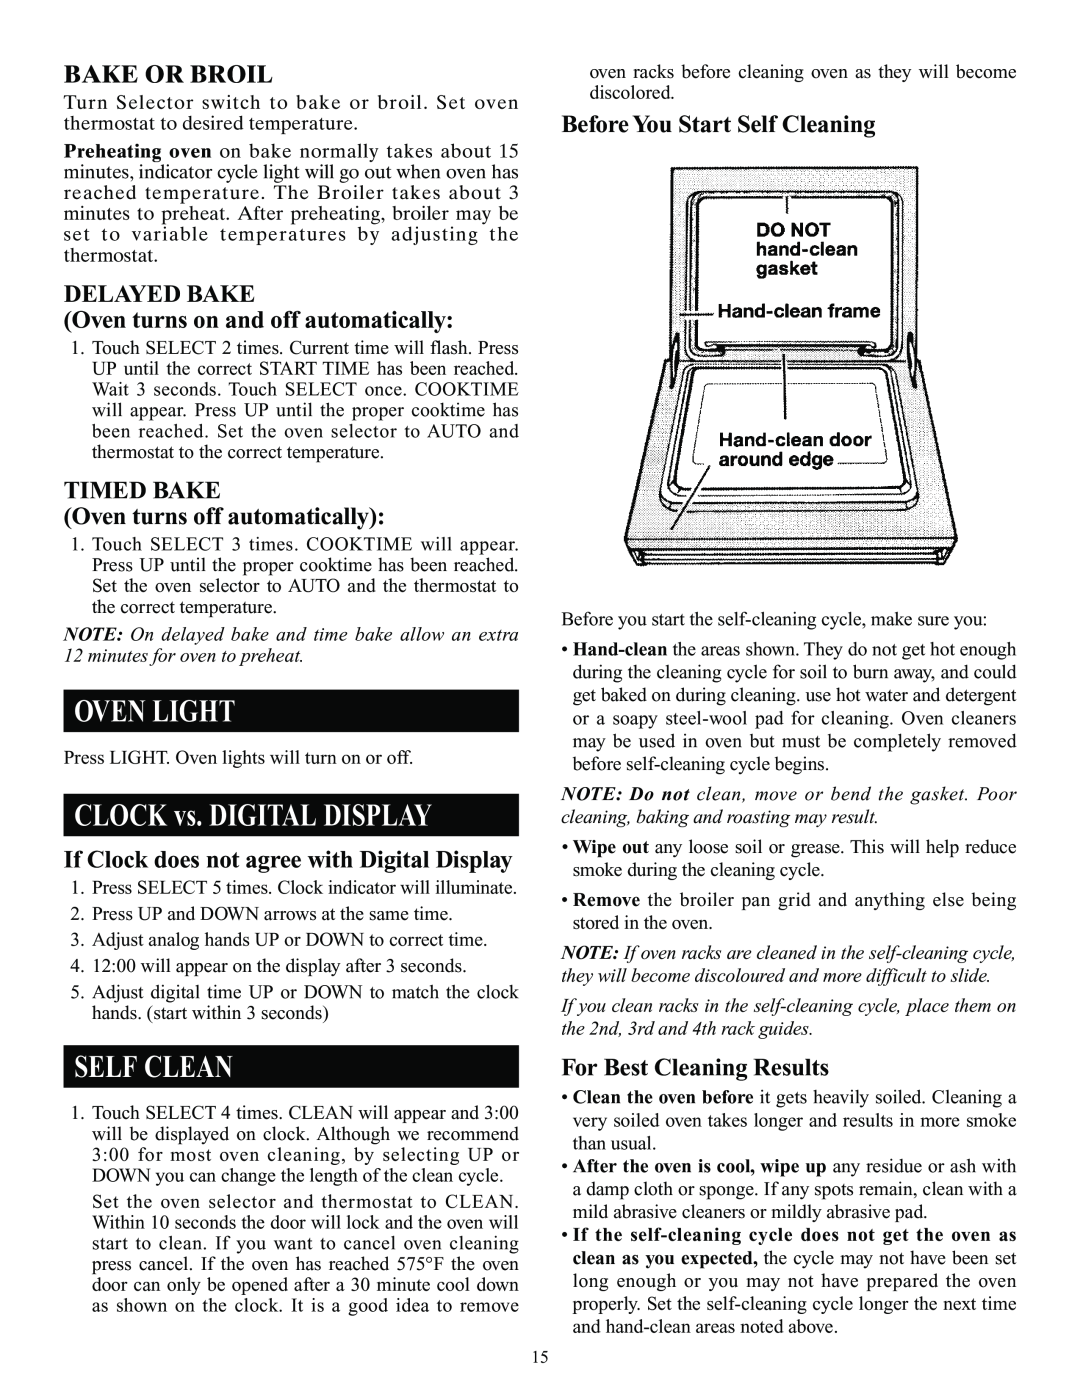 Elmira Stove Works 1954 manual Oven Light, CLOCK vs. DIGITAL DISPLAY, Bake Or Broil, Before You Start Self Cleaning 